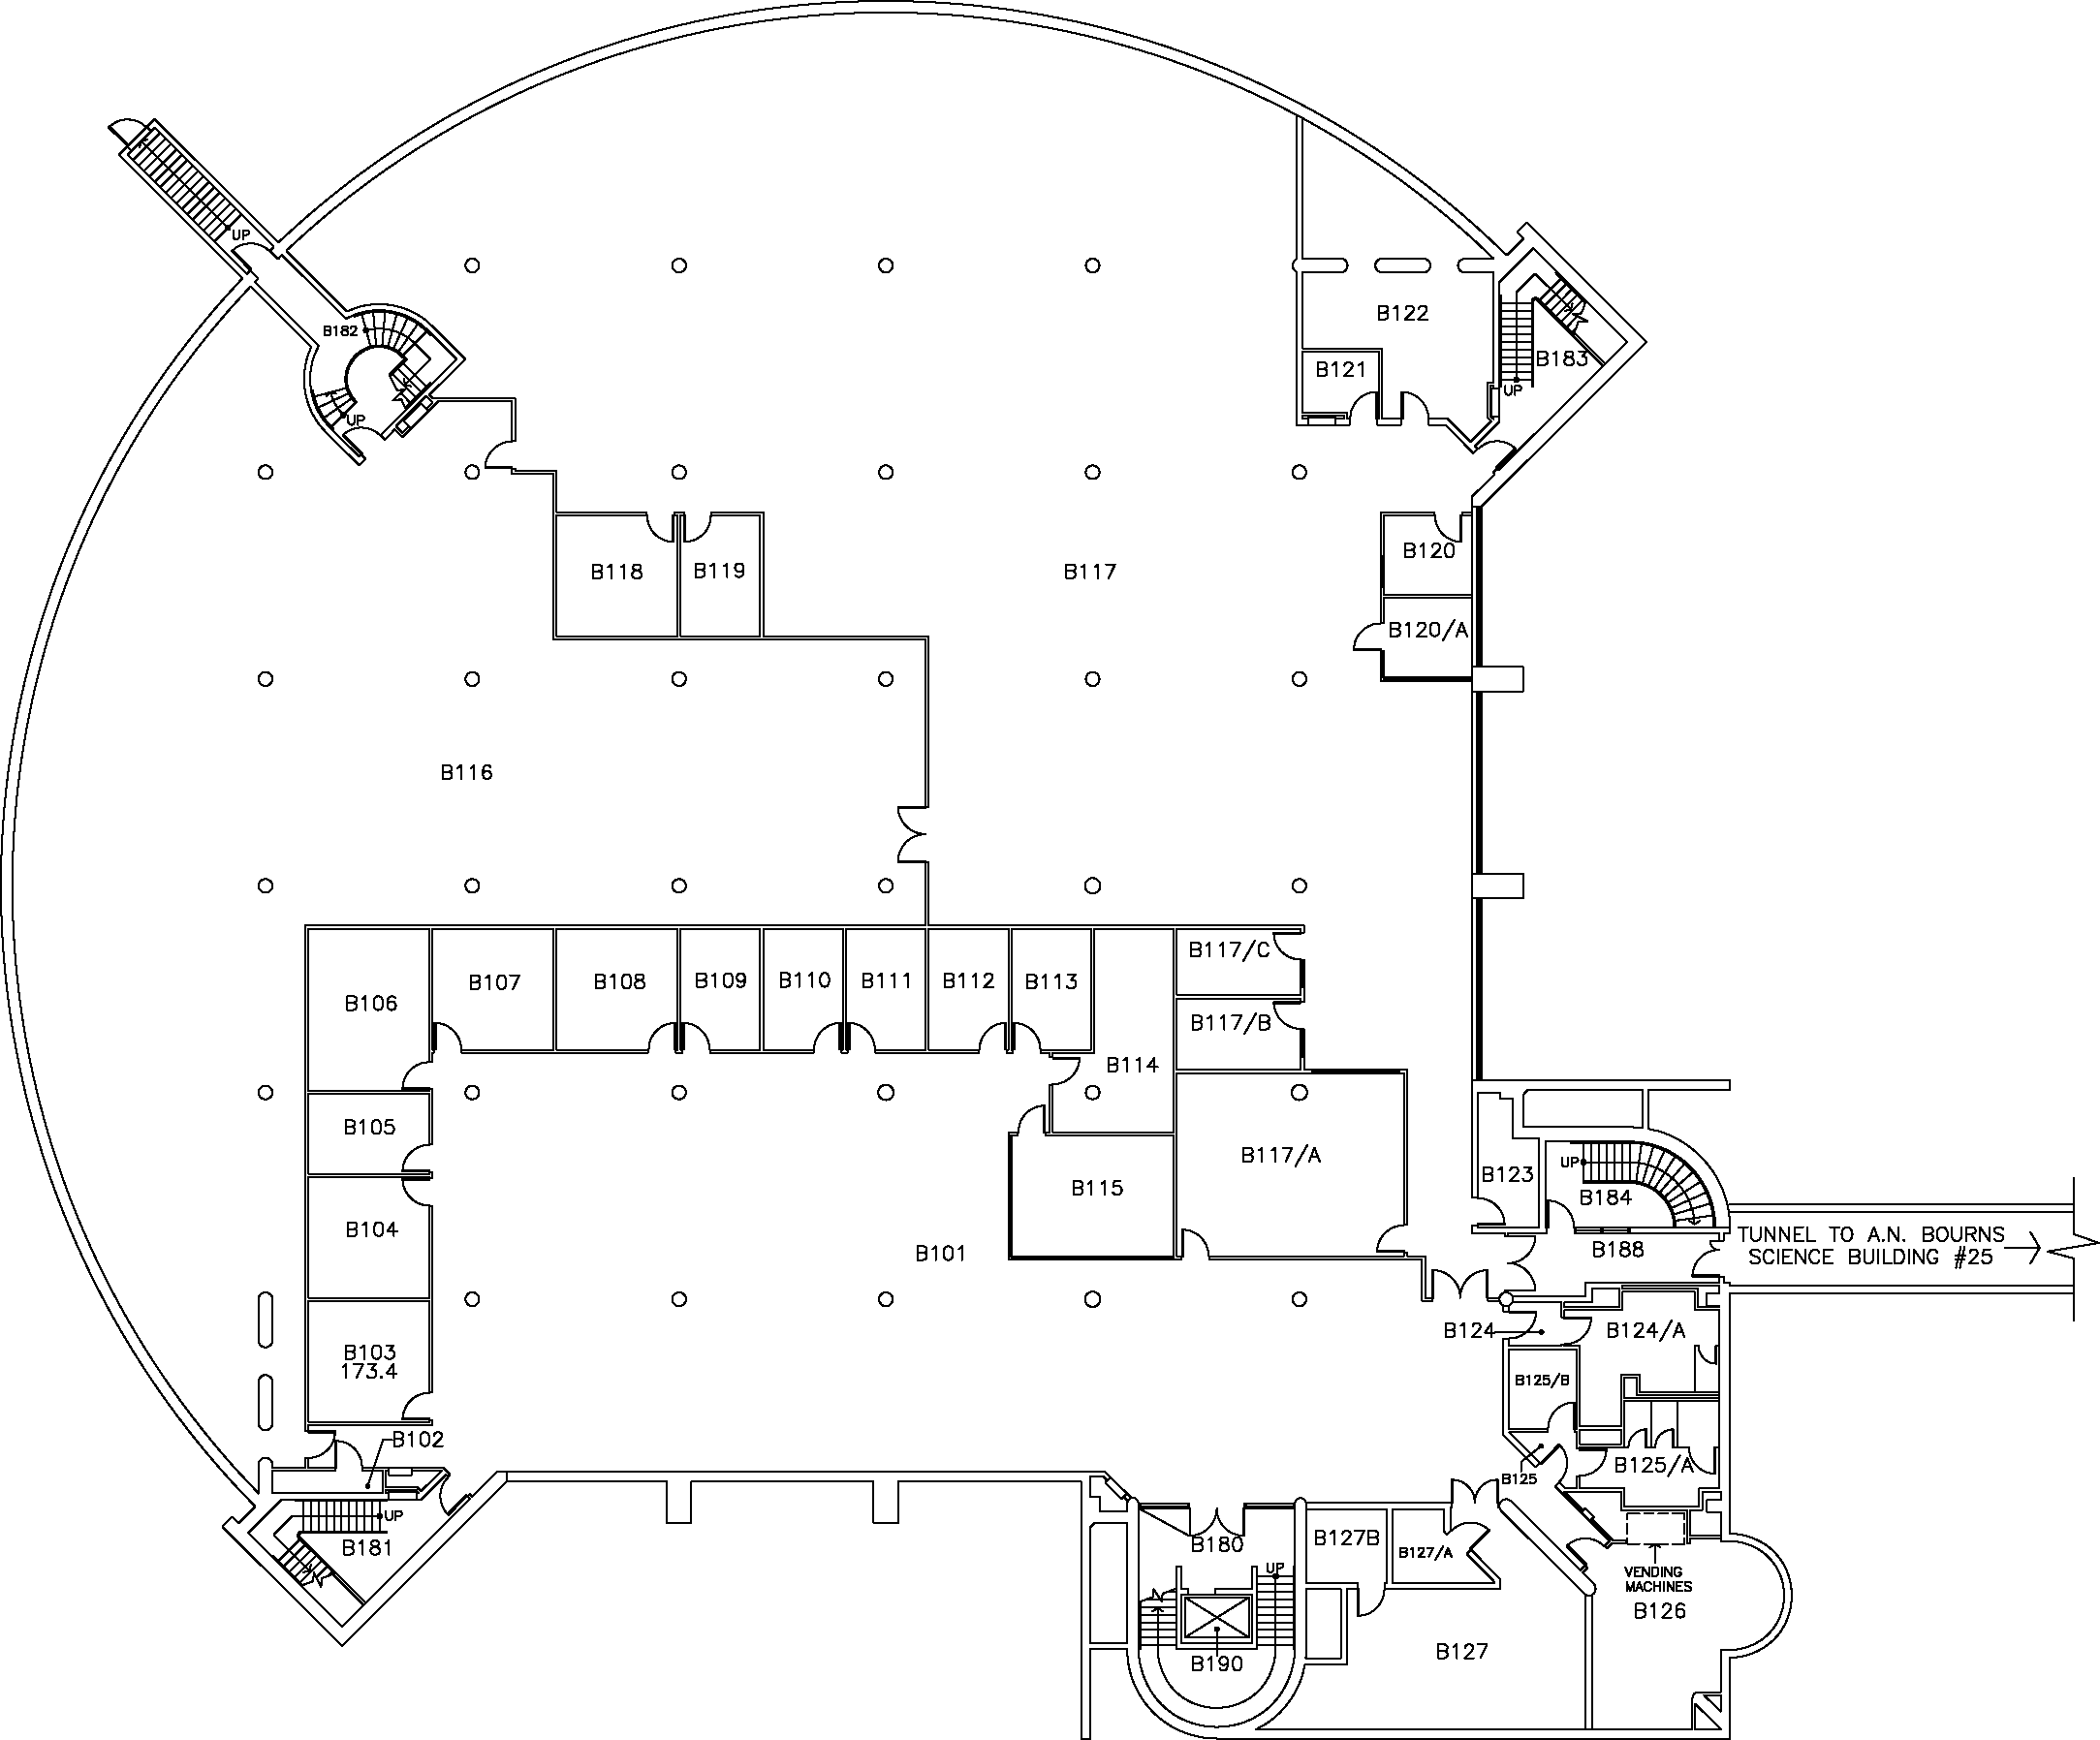 HG Thode Library - Basement Floor Map